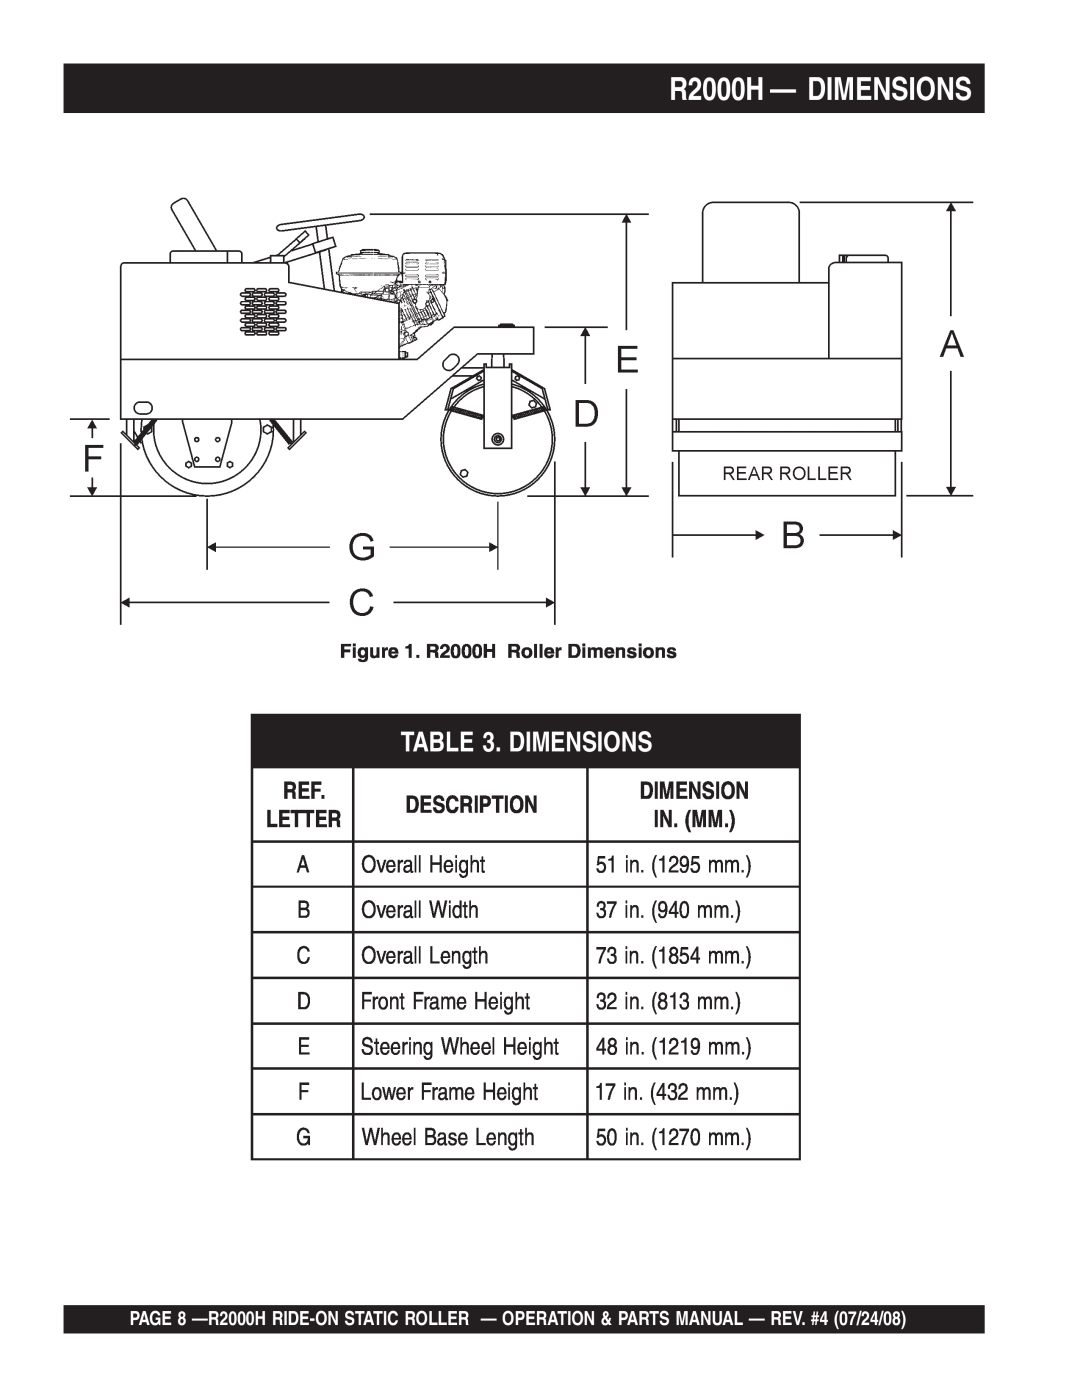 Multiquip manual R2000H - DIMENSIONS, Dimensions, Description, In. Mm 